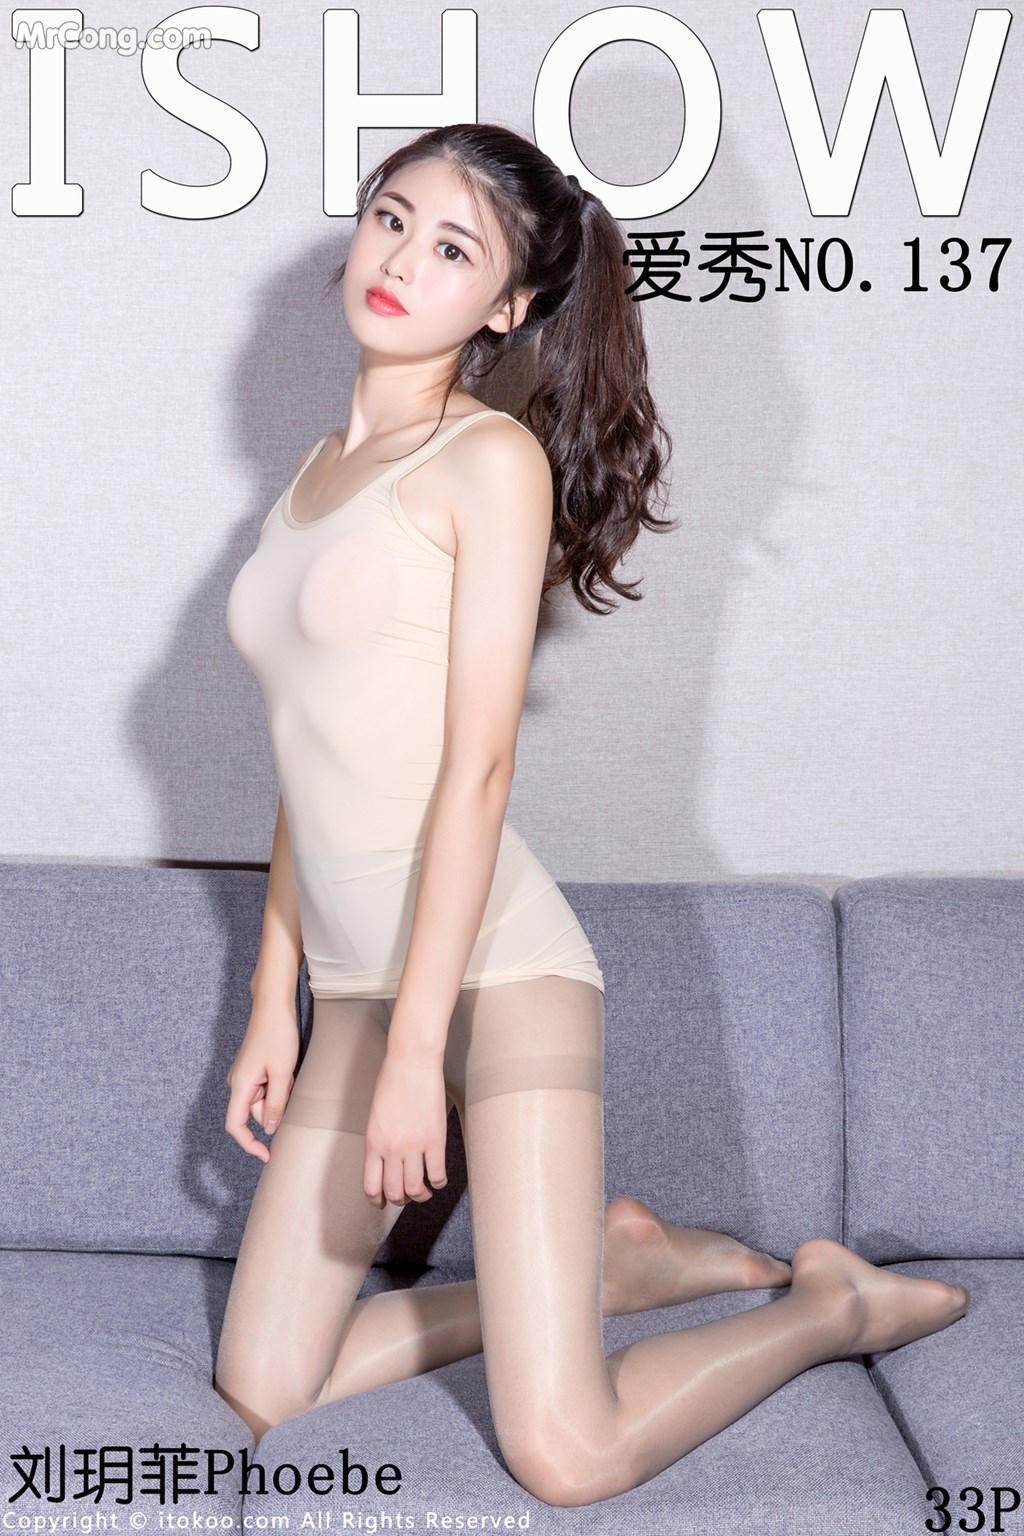 ISHOW No.137: Model Liu Yue Fei (刘 玥 菲 Phoebe) (34 photos) photo 1-0